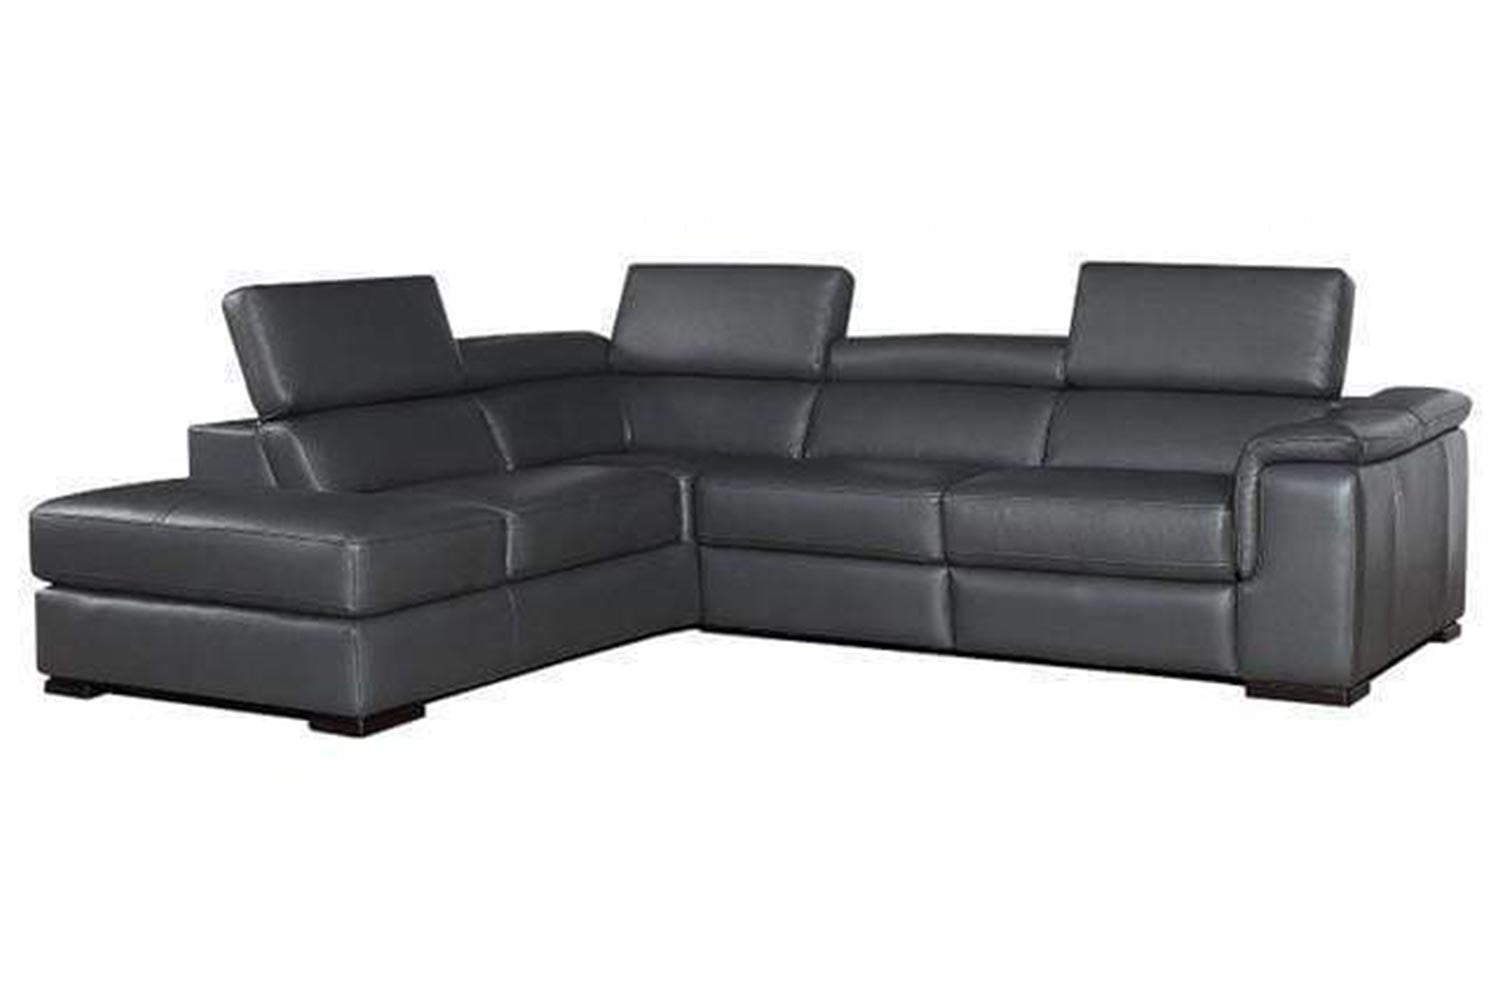 Agata Premium Leather Sectional | J&M Furniture